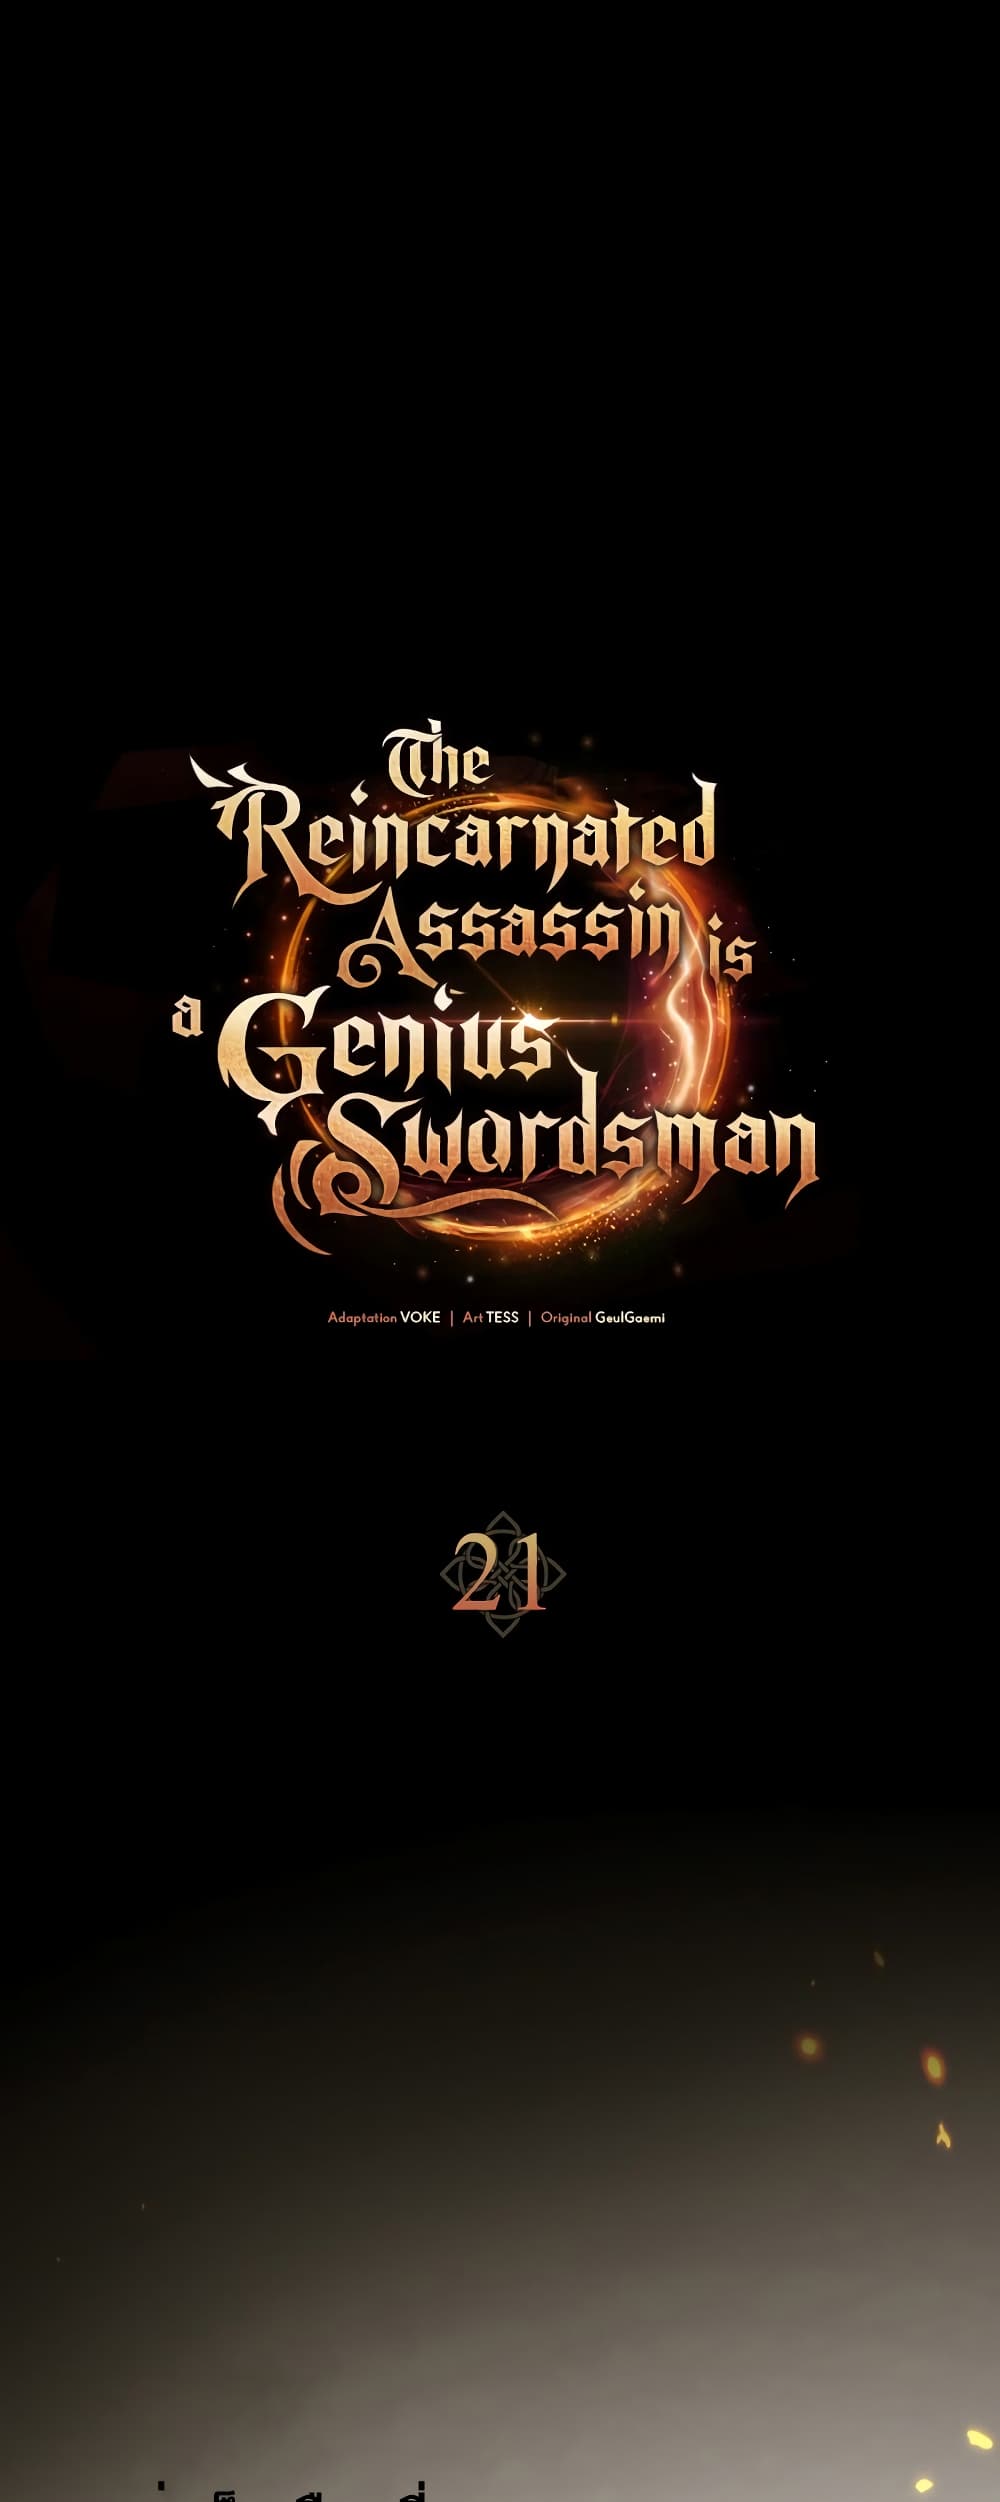 The Reincarnated Assassin is a Genius Swordsman 21-21